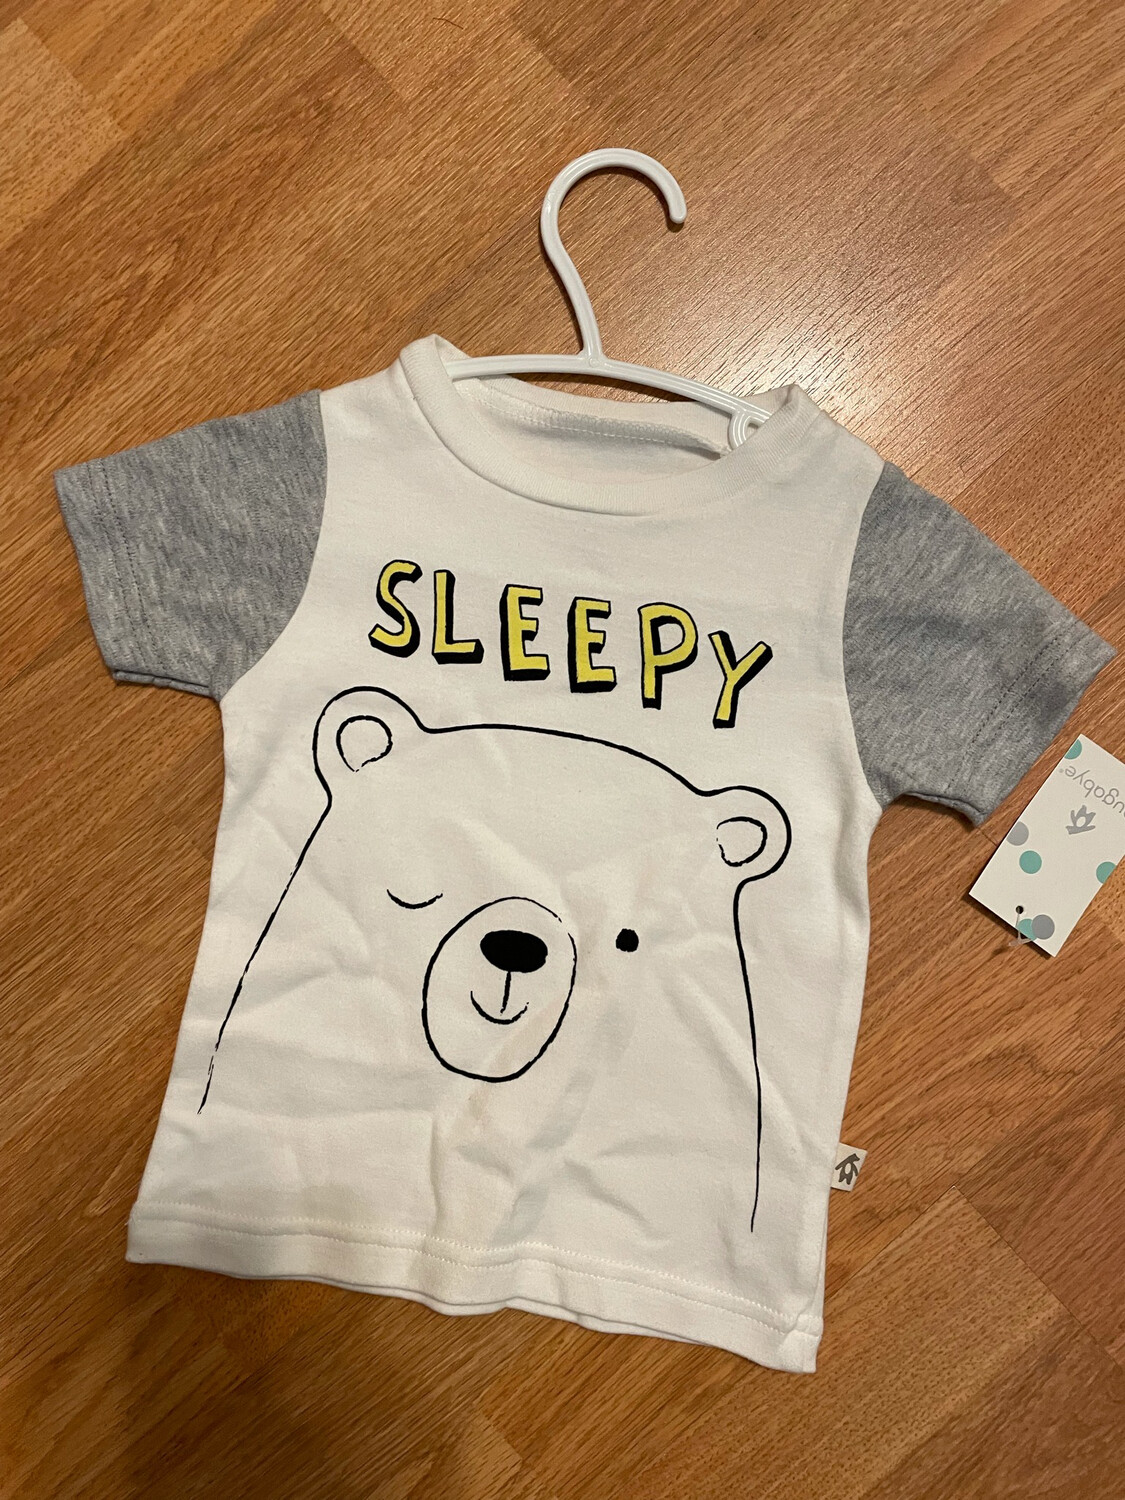 Sleepy Bedtime T-shirt